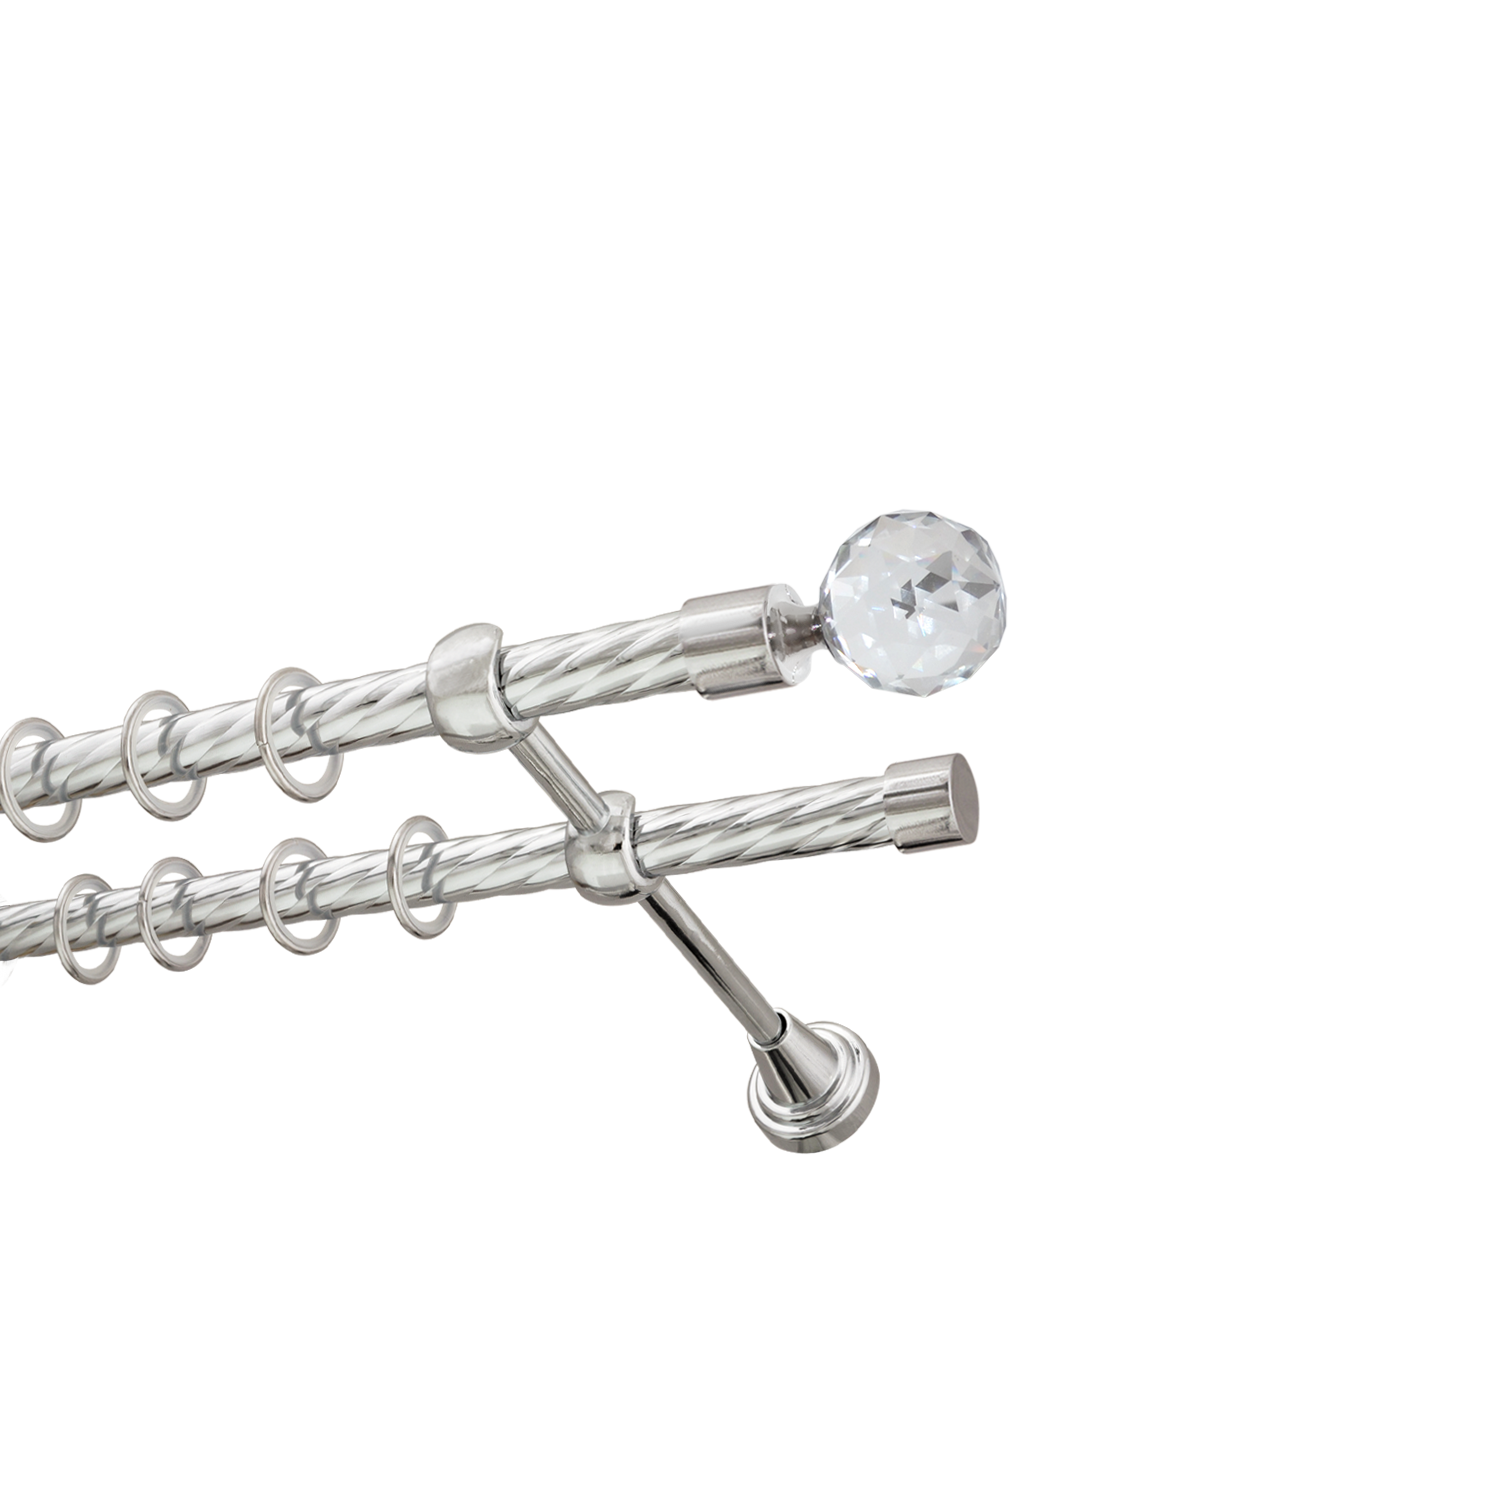 Металлический карниз для штор Карат, двухрядный 16/16 мм, серебро, витая штанга, длина 300 см - фото Wikidecor.ru